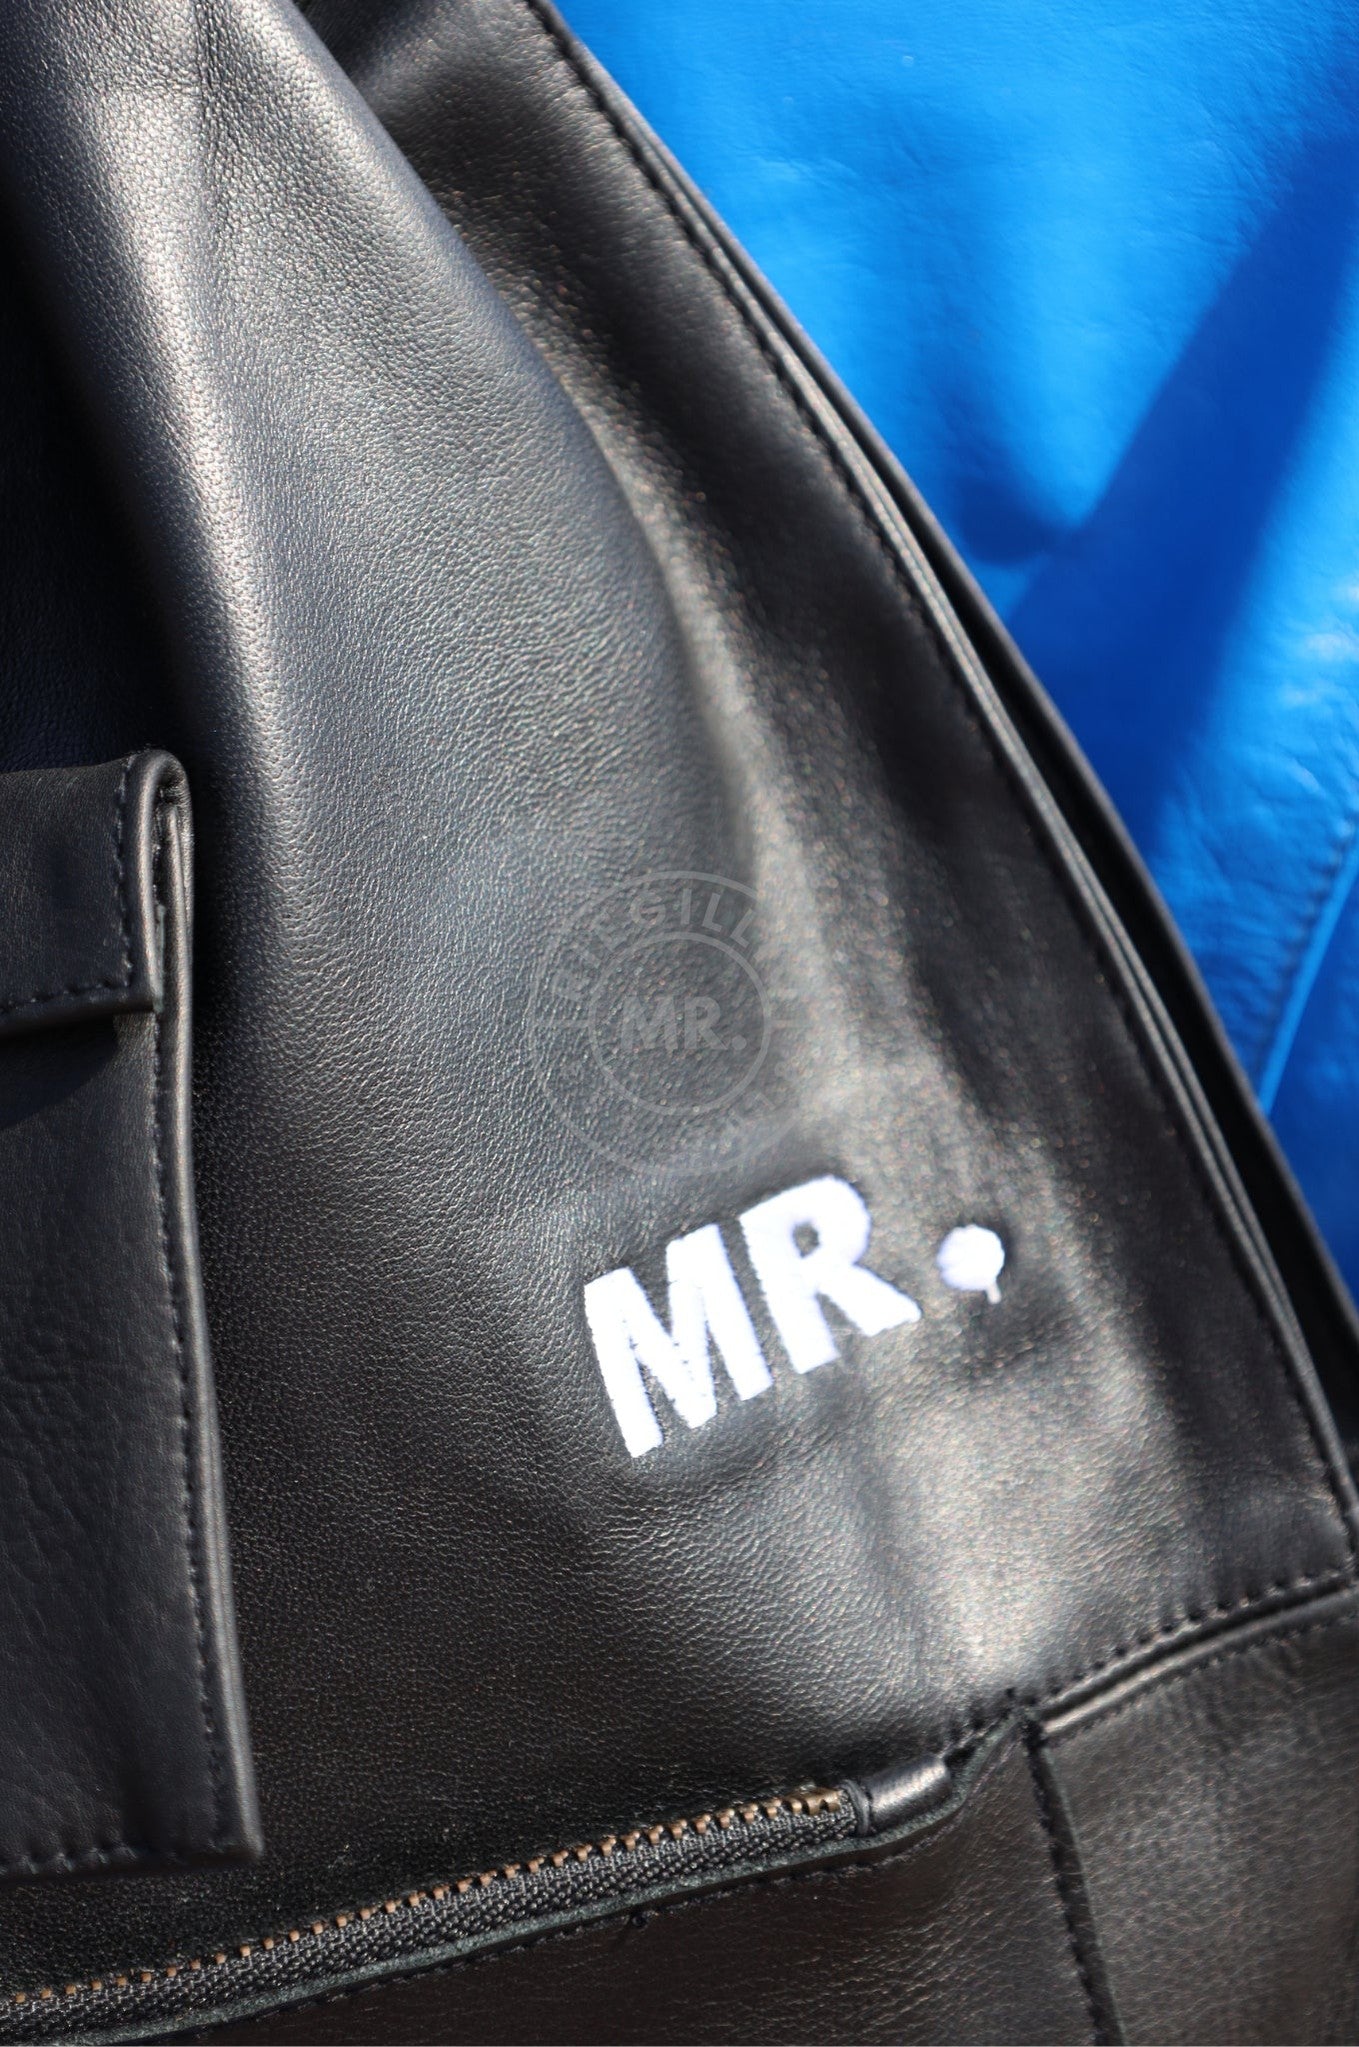 Leather Backpack Full Black-at MR. Riegillio